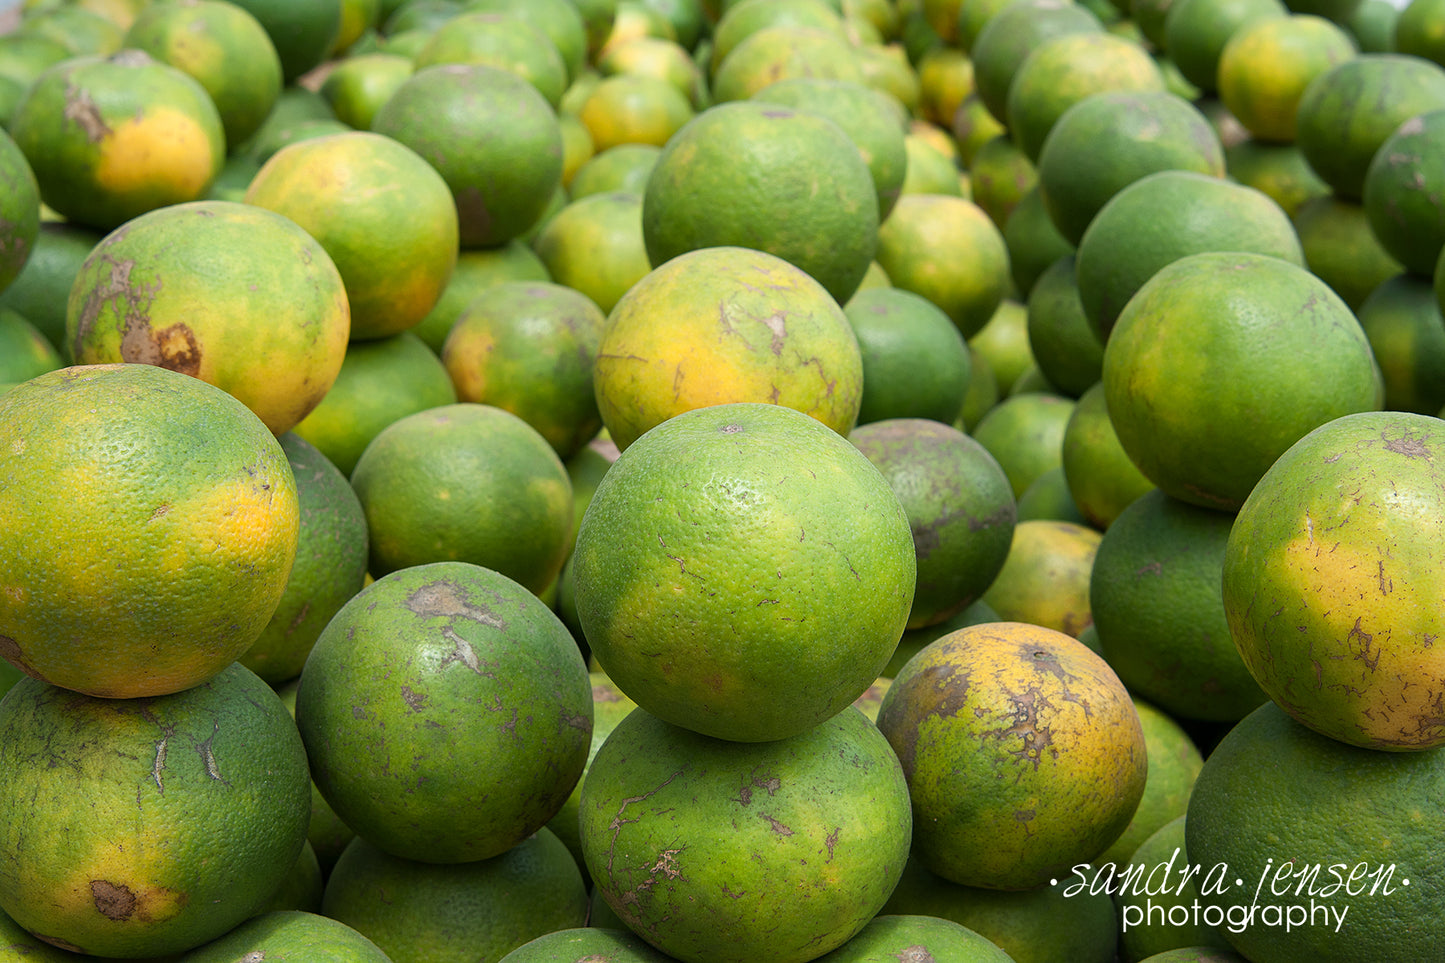 Print - Zanzibar, Tanzania - Oranges 2 in Market Stall in Stonetown